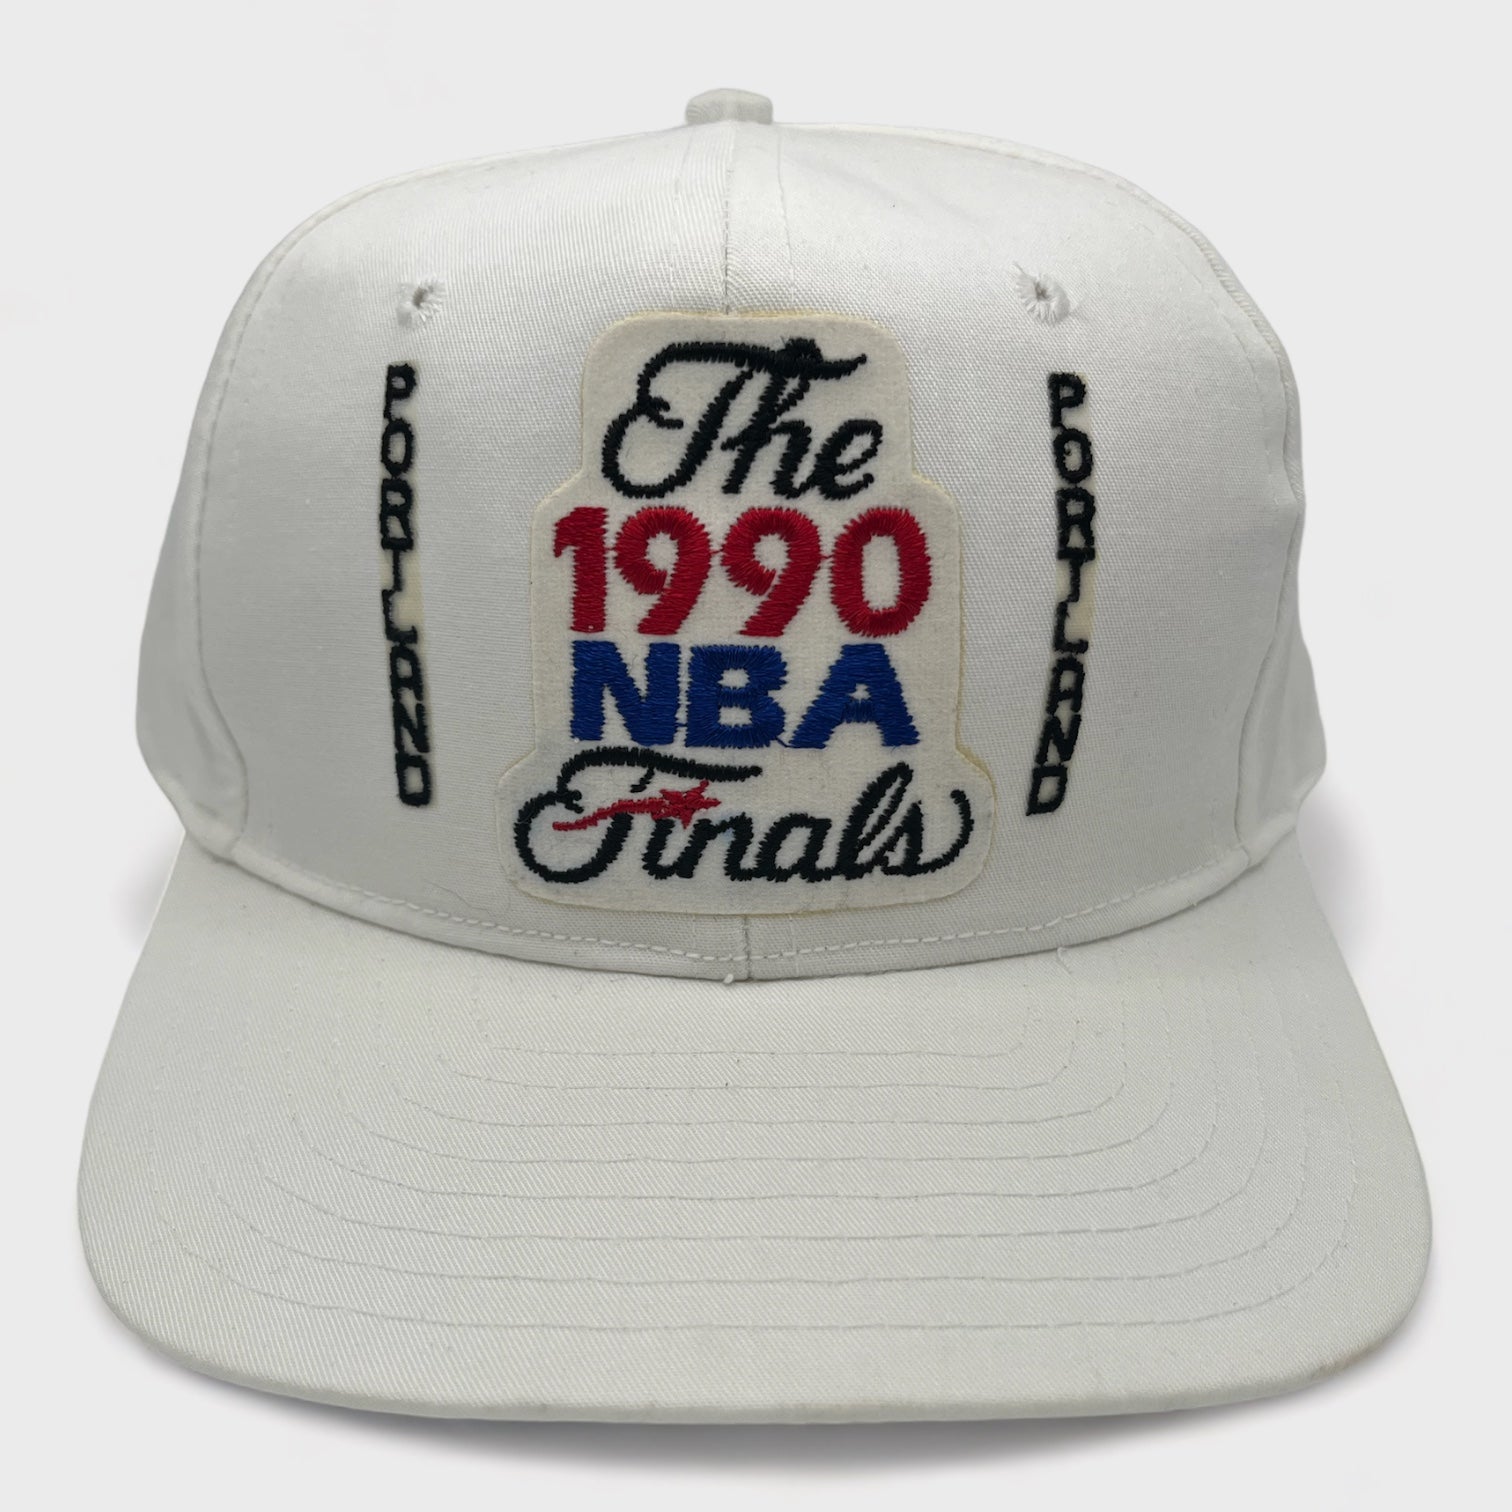 Vintage Portland Trail Blazers 1990 NBA Finals Snapback Hat